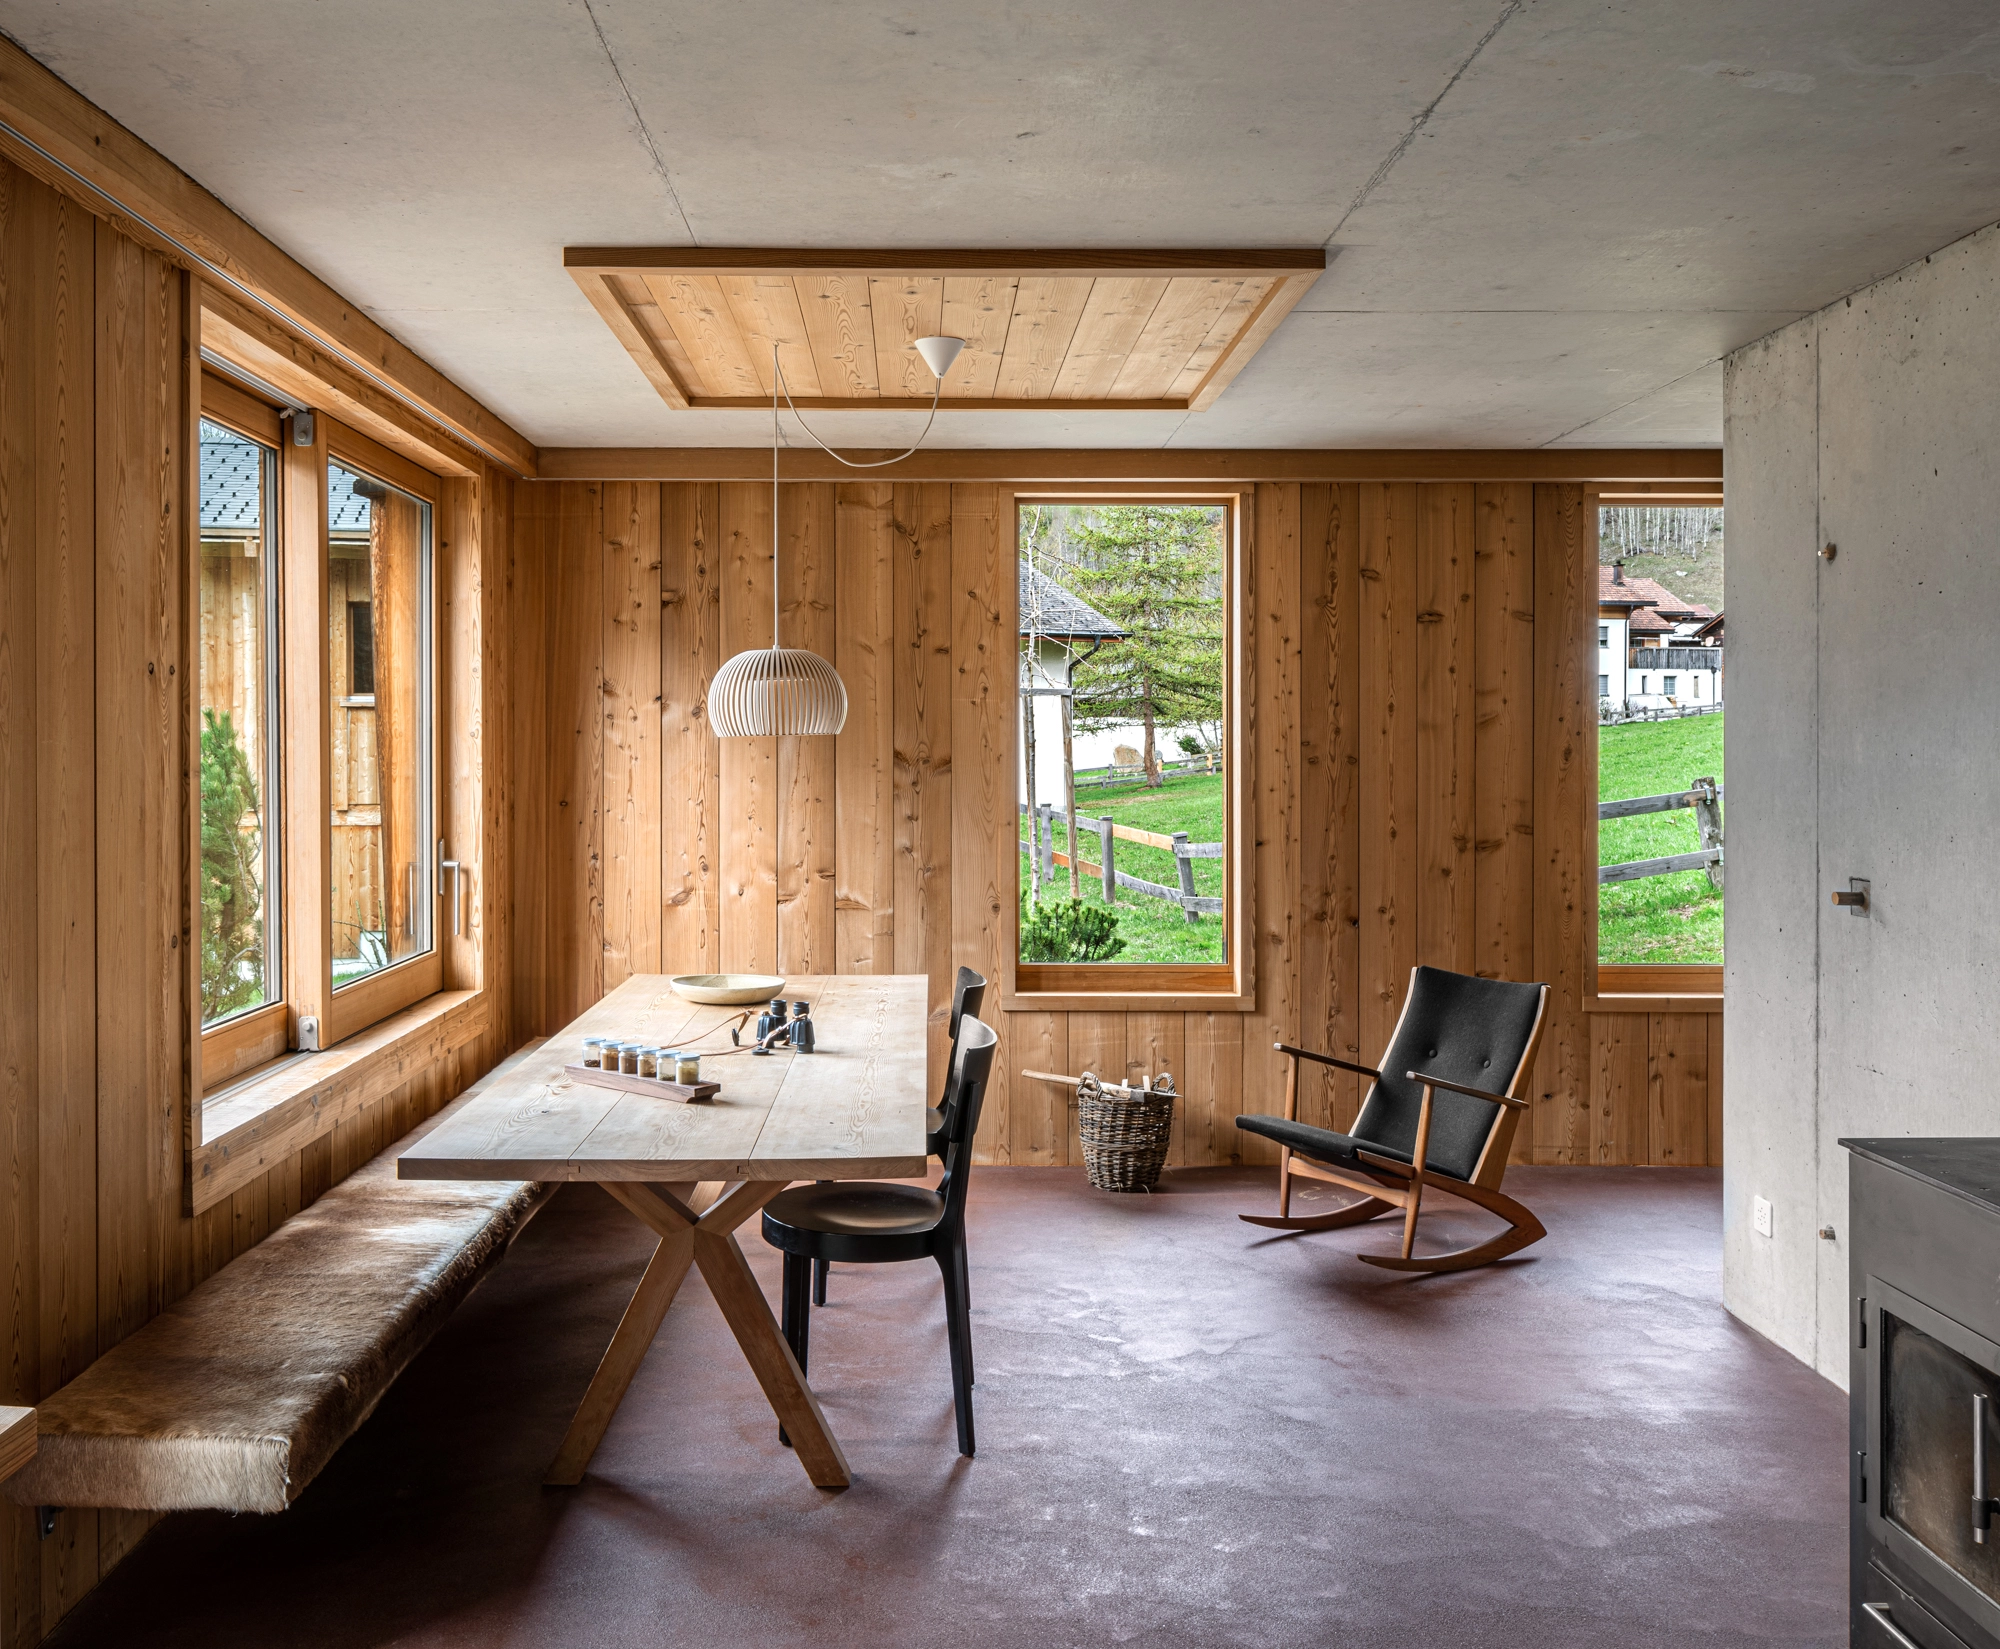 Casa Girsberger, Münster-Geschinen, Suiza  |  Gion Caminada, arquitecto